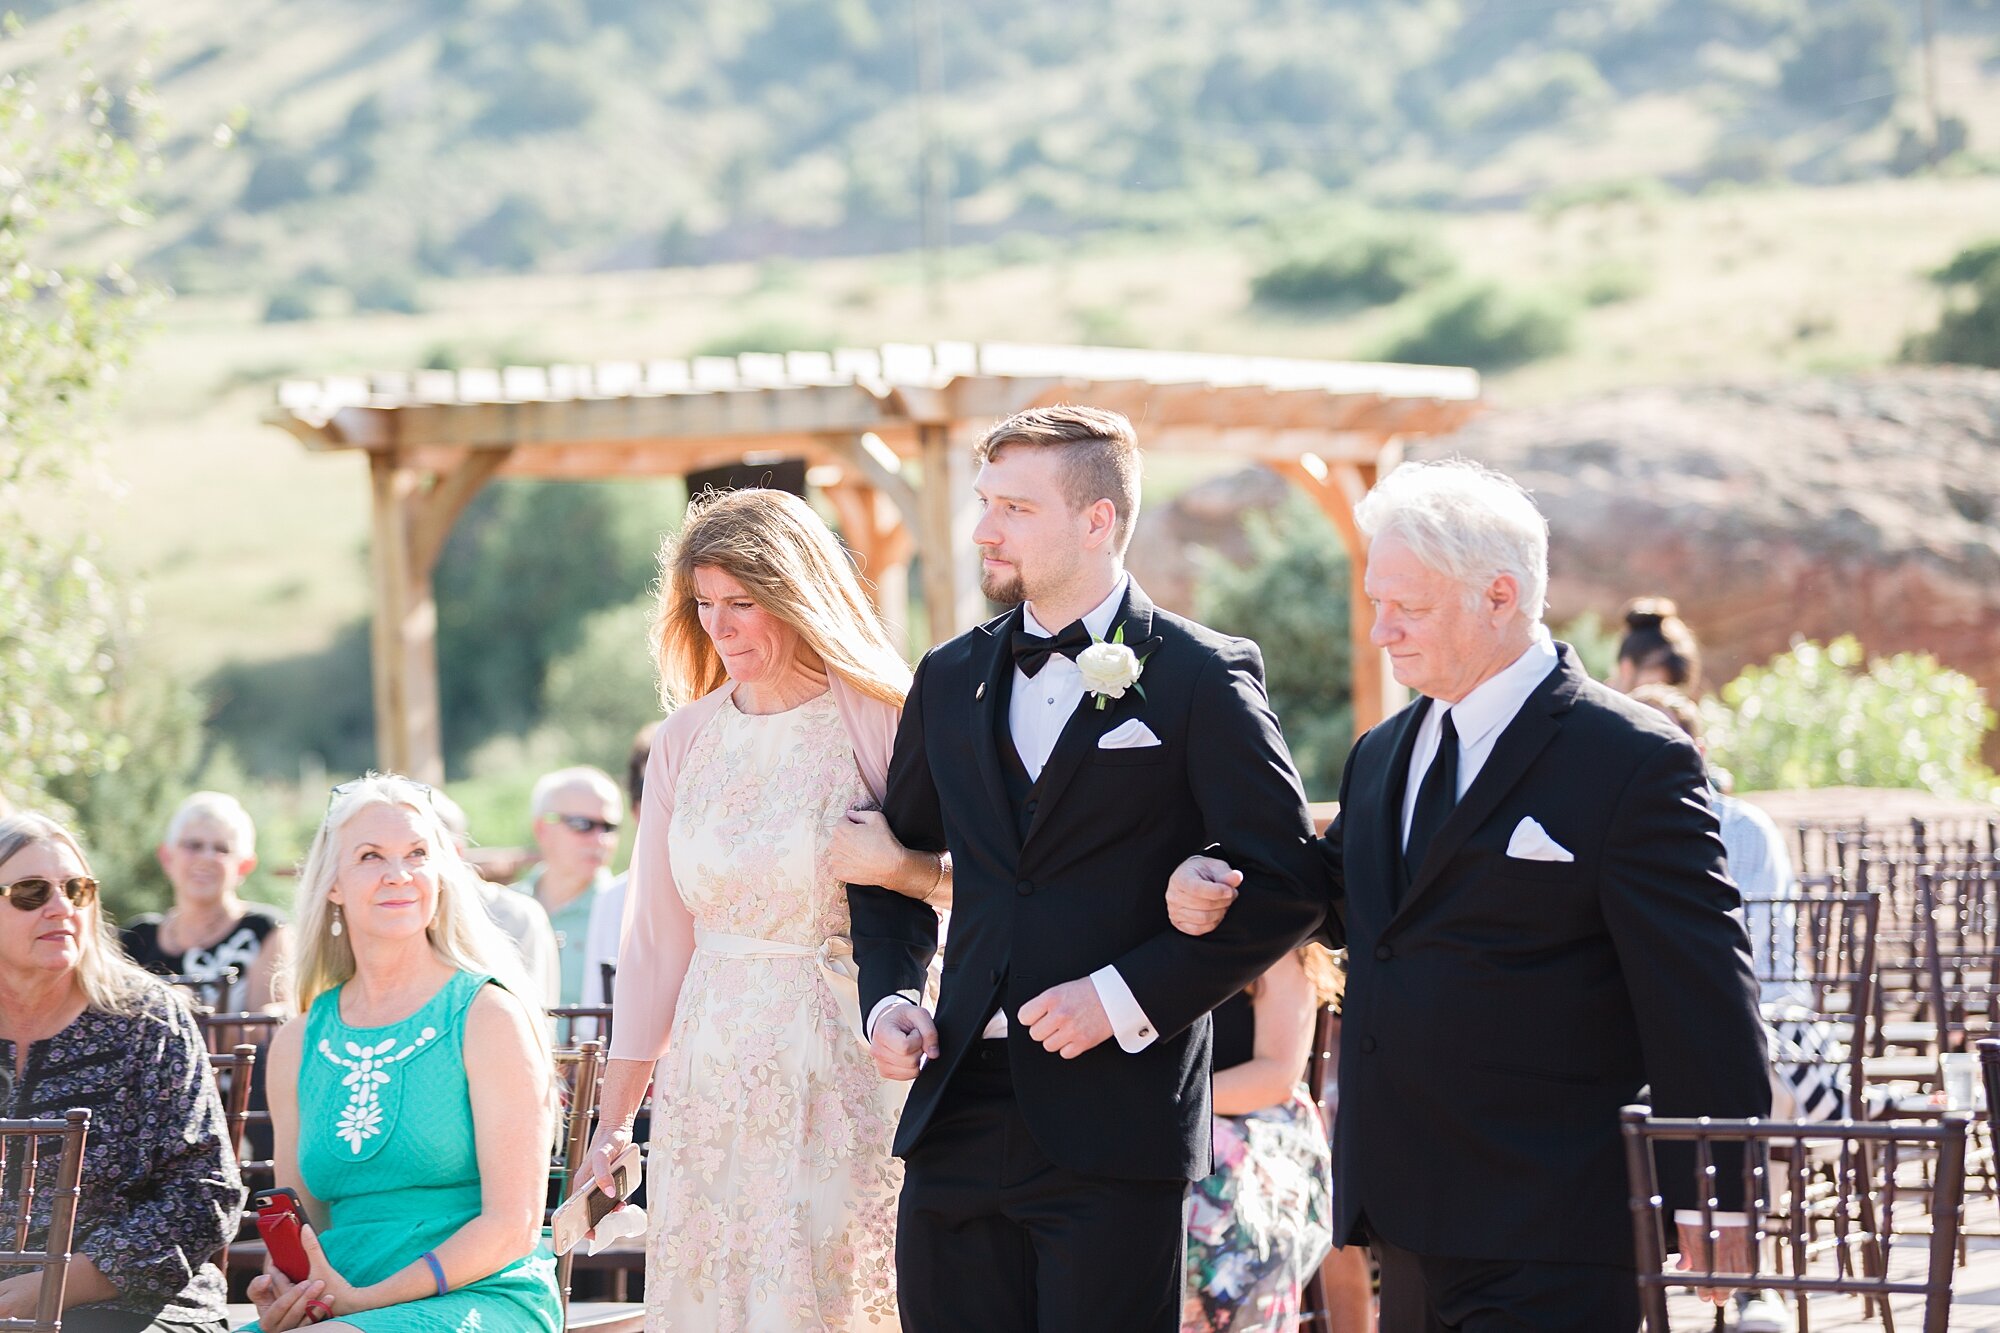 Kristen Vance Photography - Willow Ridge Manor Wedding, Morrison, CO